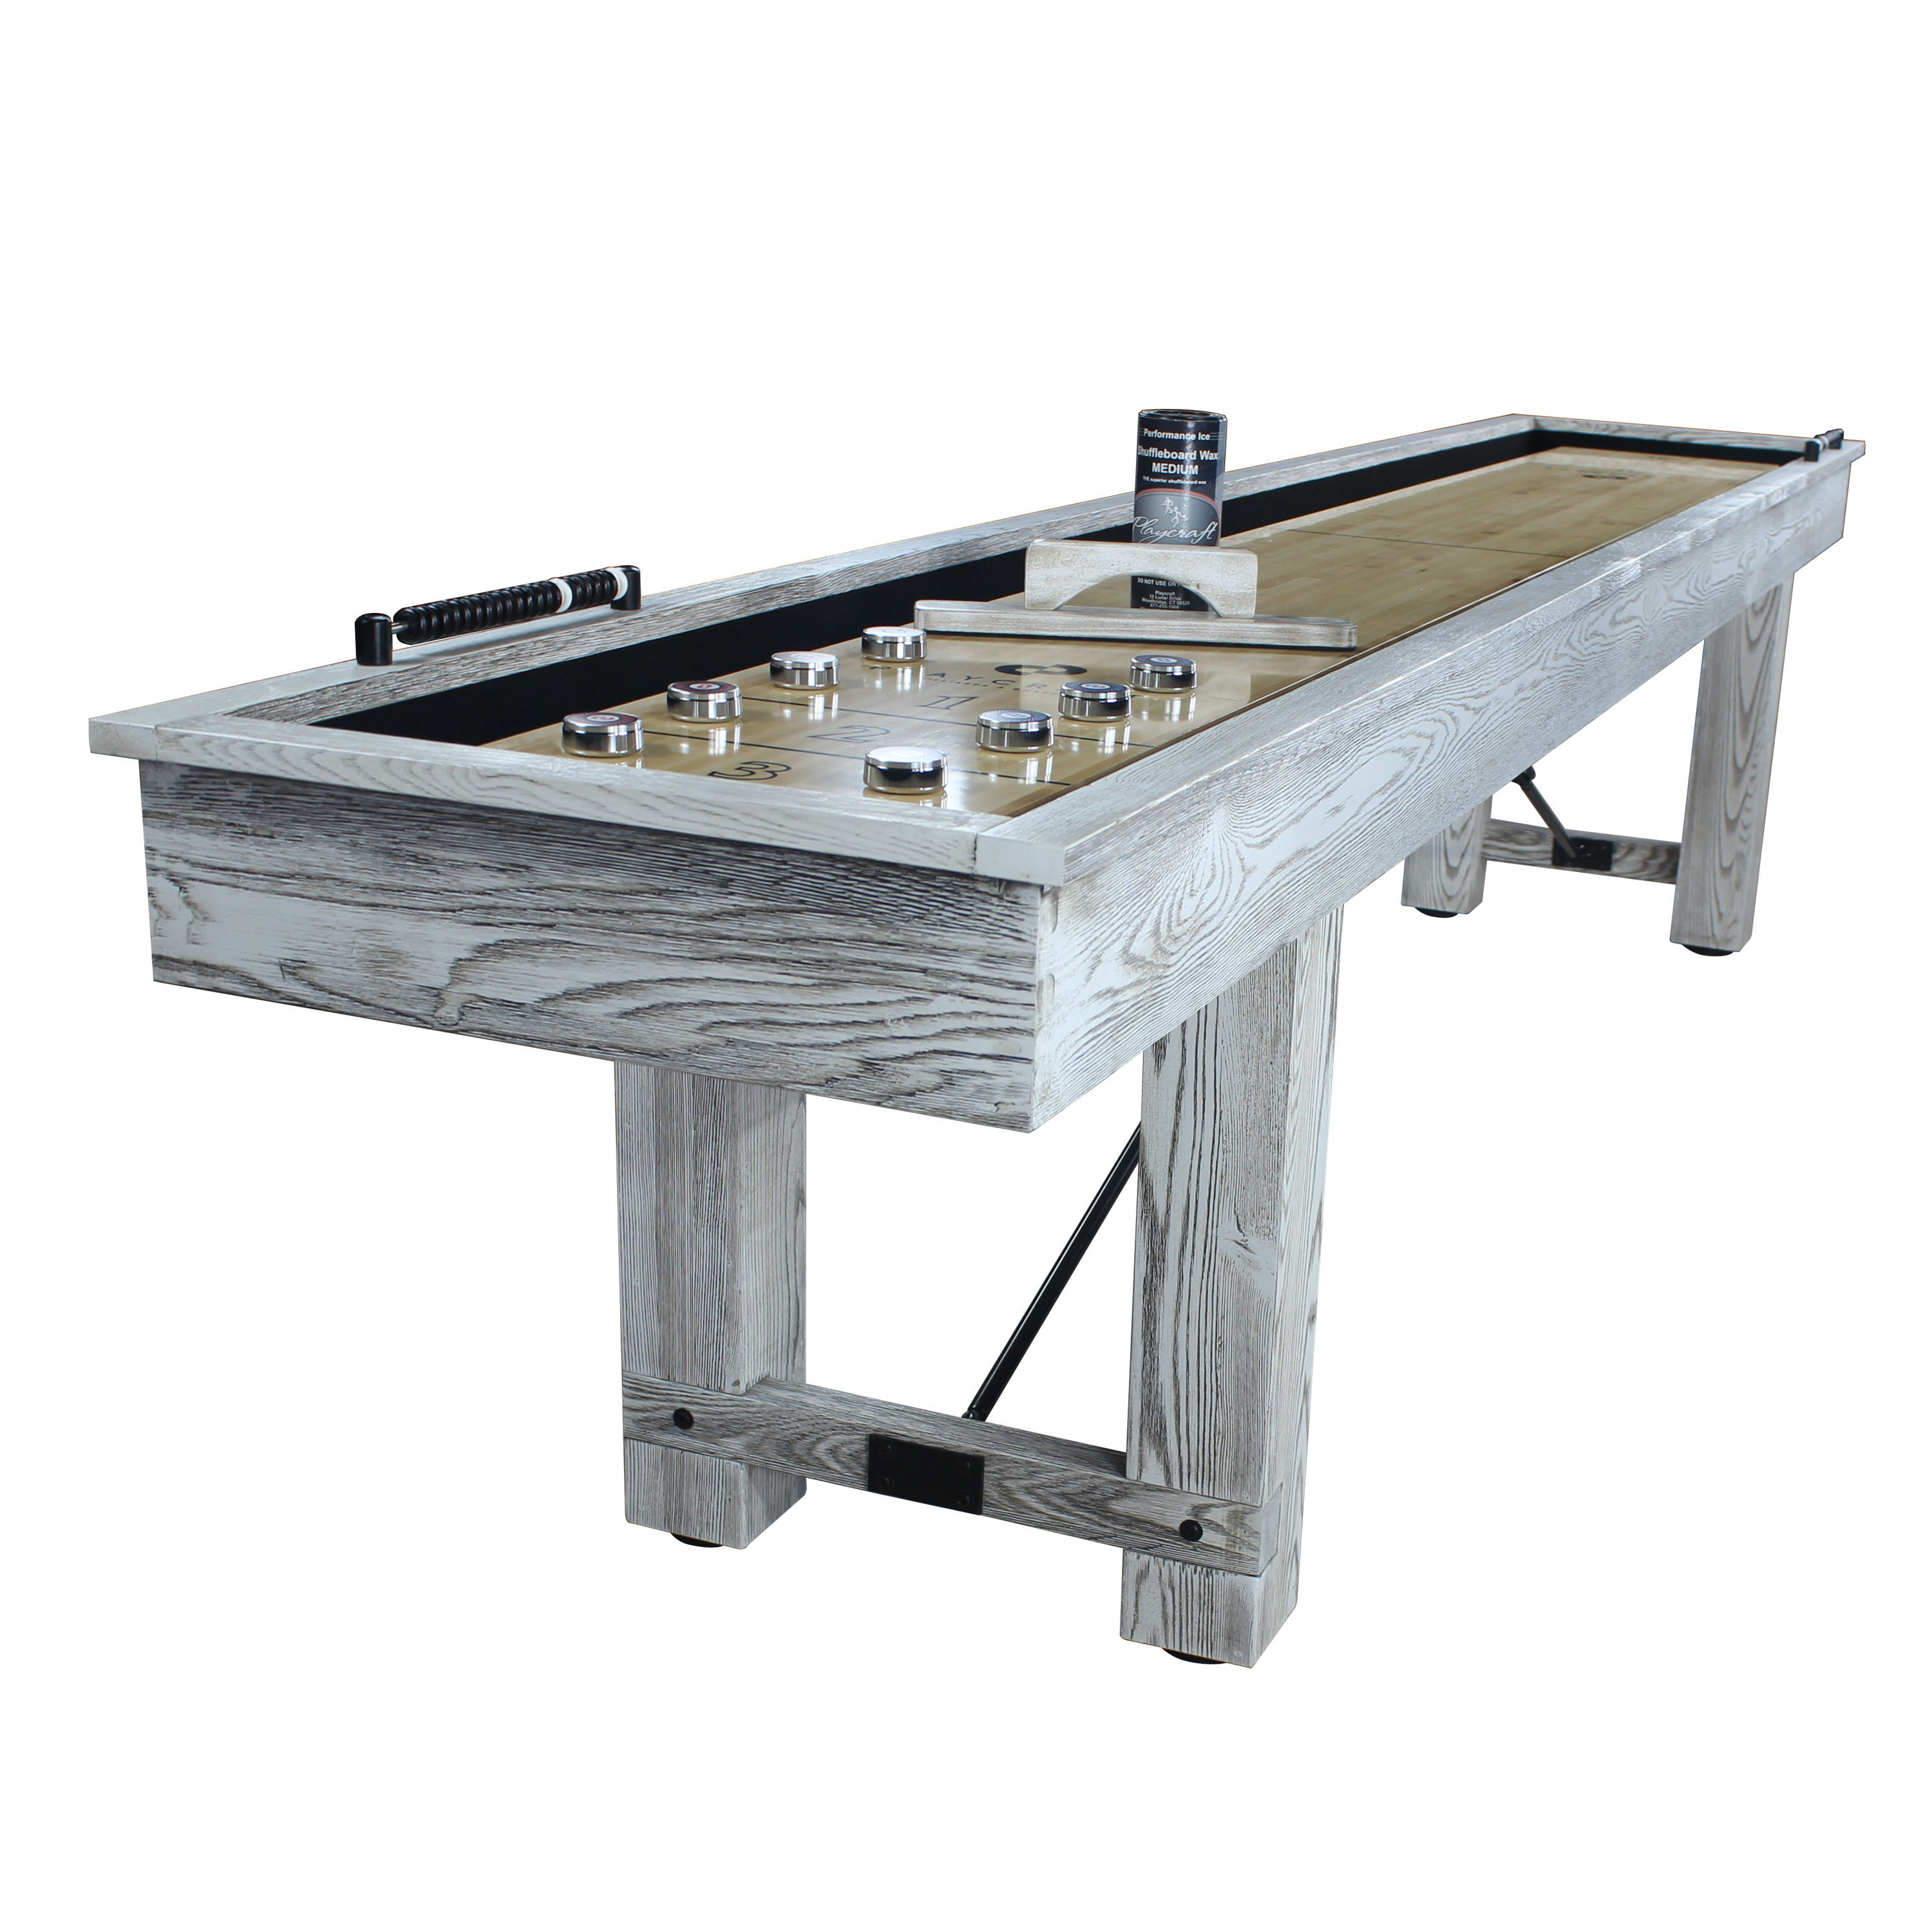 Shuffleboard Table Used Craigslist, Deluxe Maintenance kit will